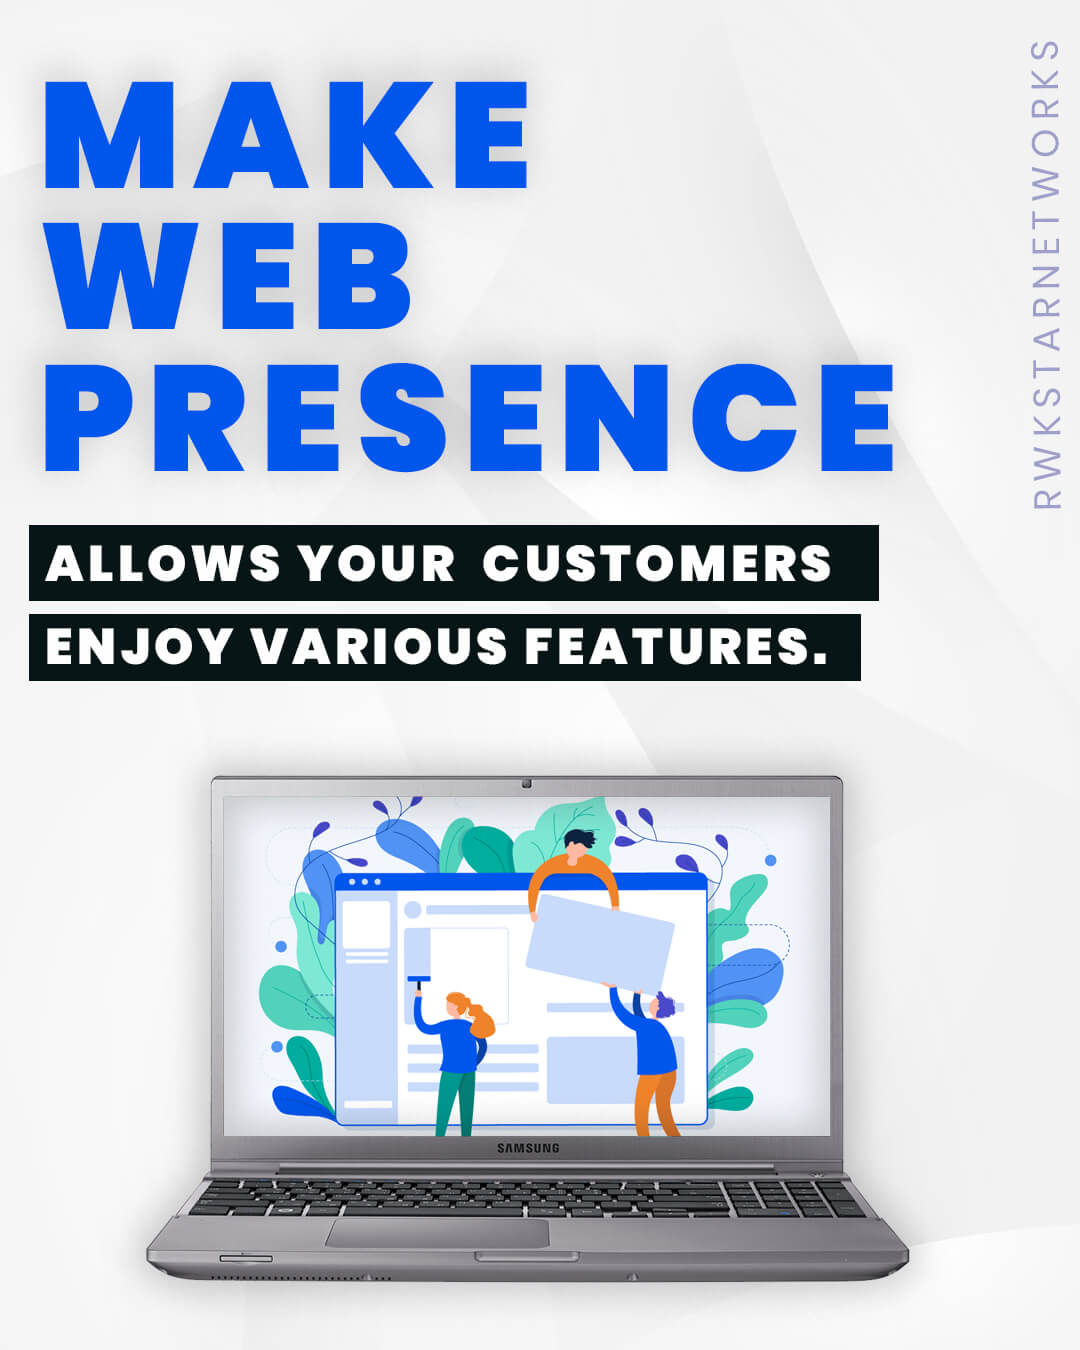 Make your web presence